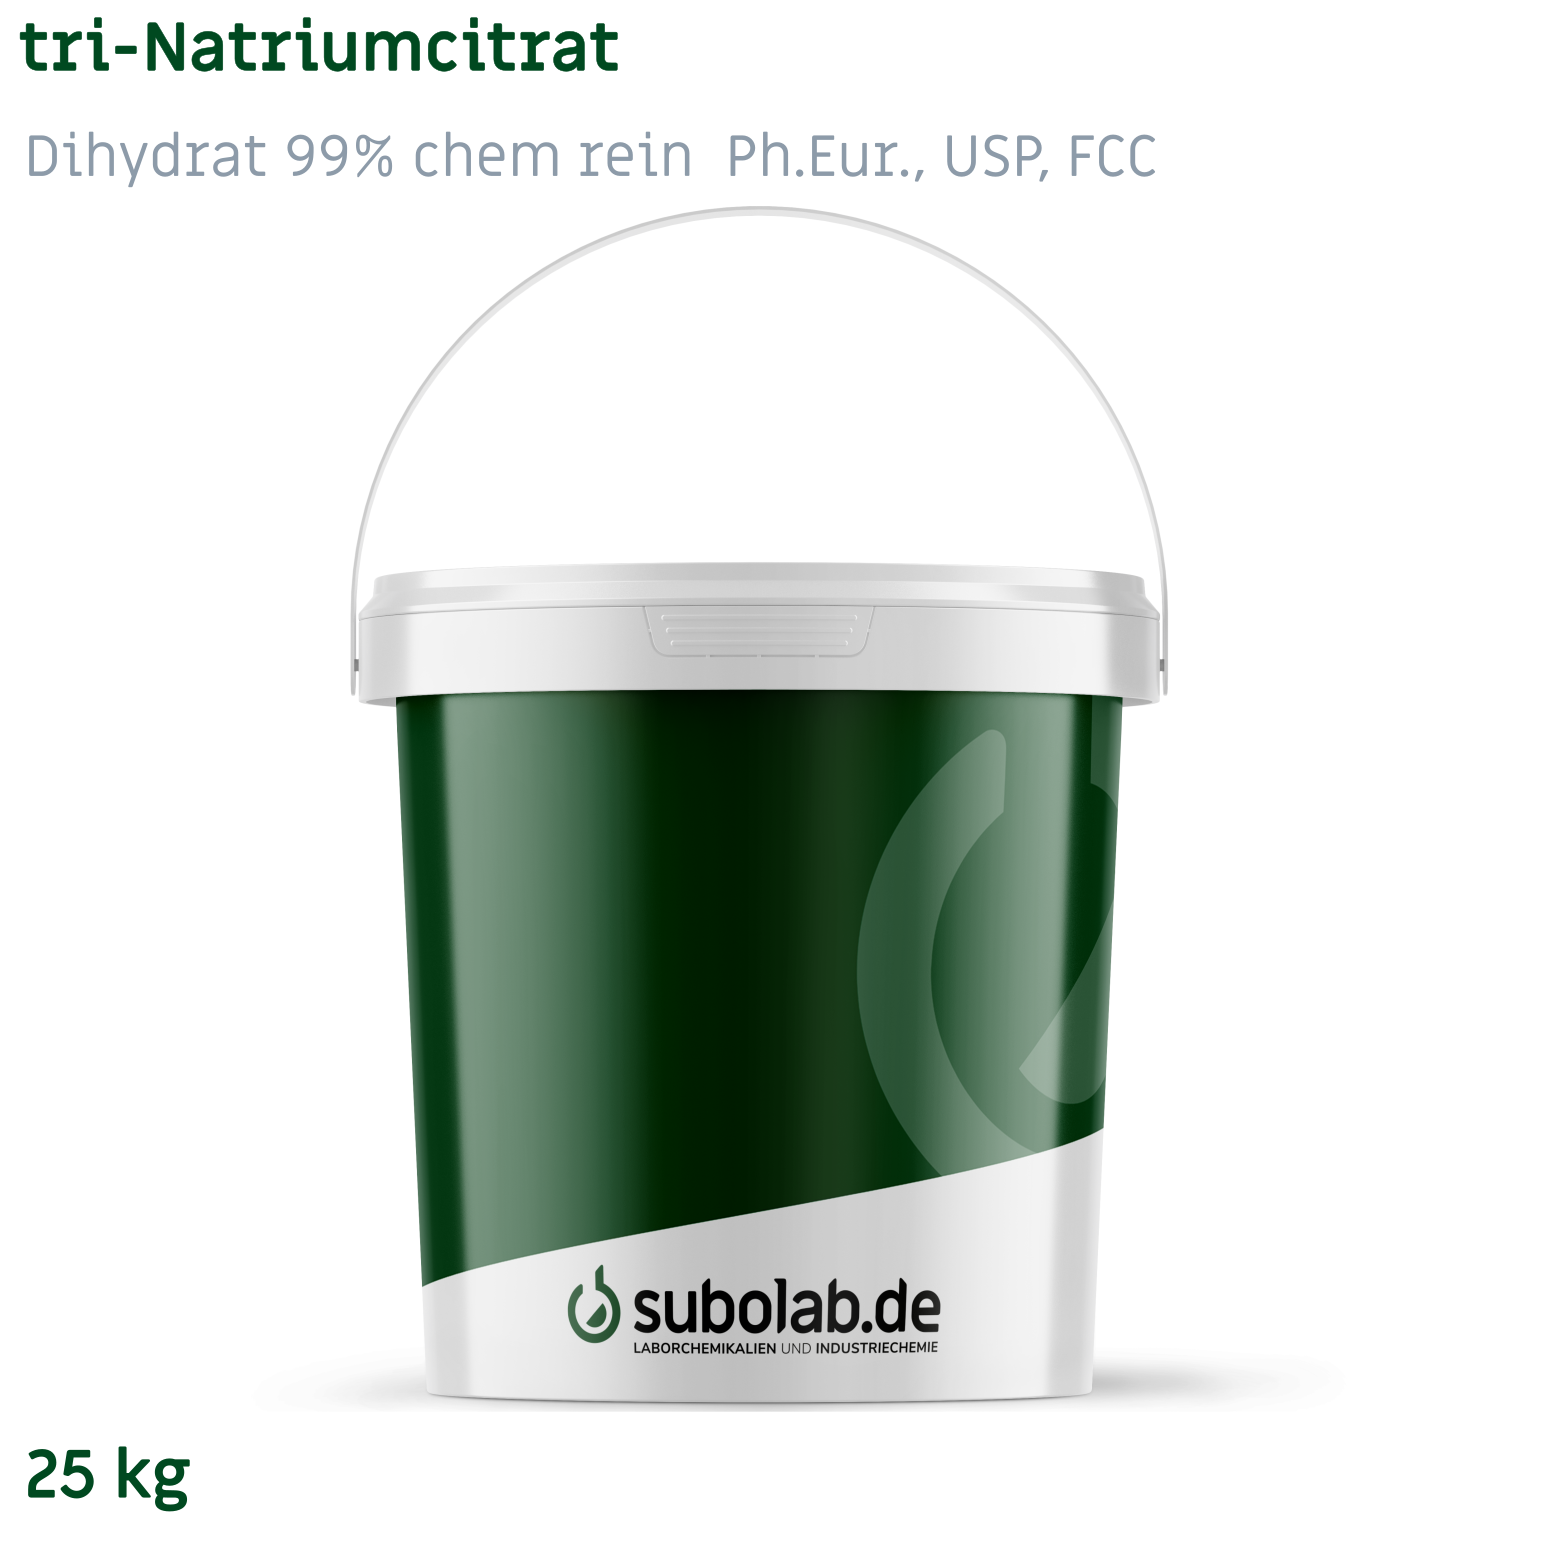 Bild von tri-Natriumcitrat - Dihydrat 99% chem rein  Ph.Eur., USP, FCC (25 kg)